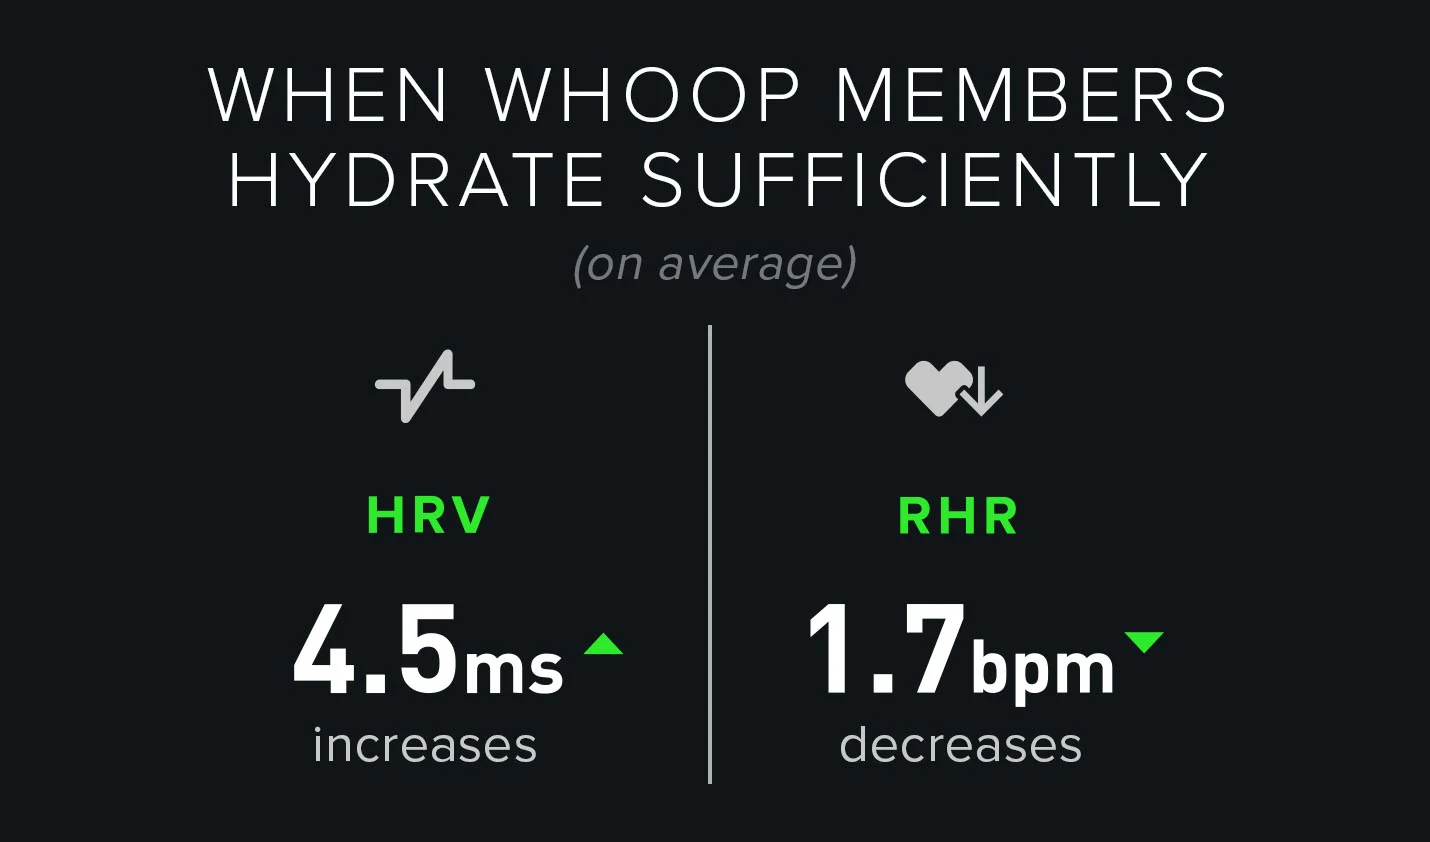 hydration improves WHOOP HRV, RHR